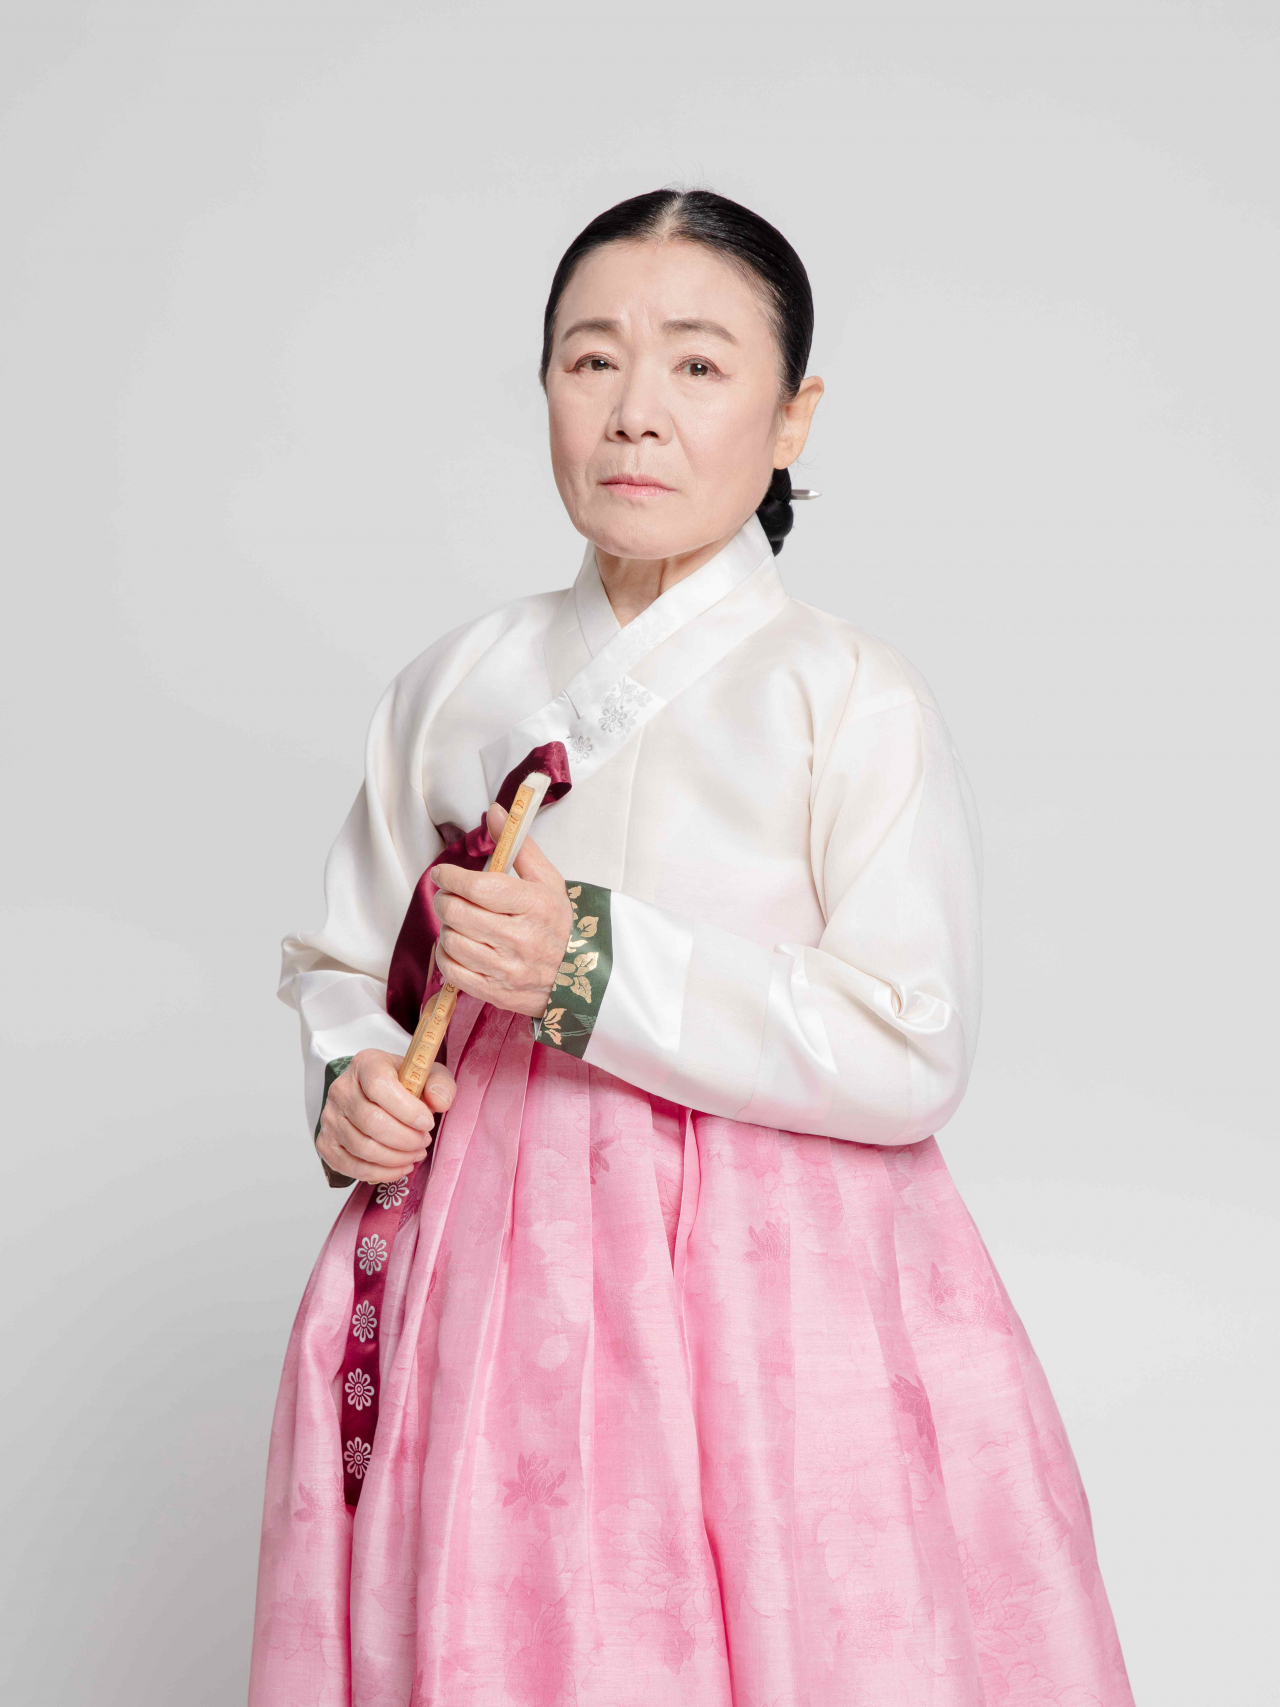 Pansori master Ahn Sook-sun (National Theater of Korea)